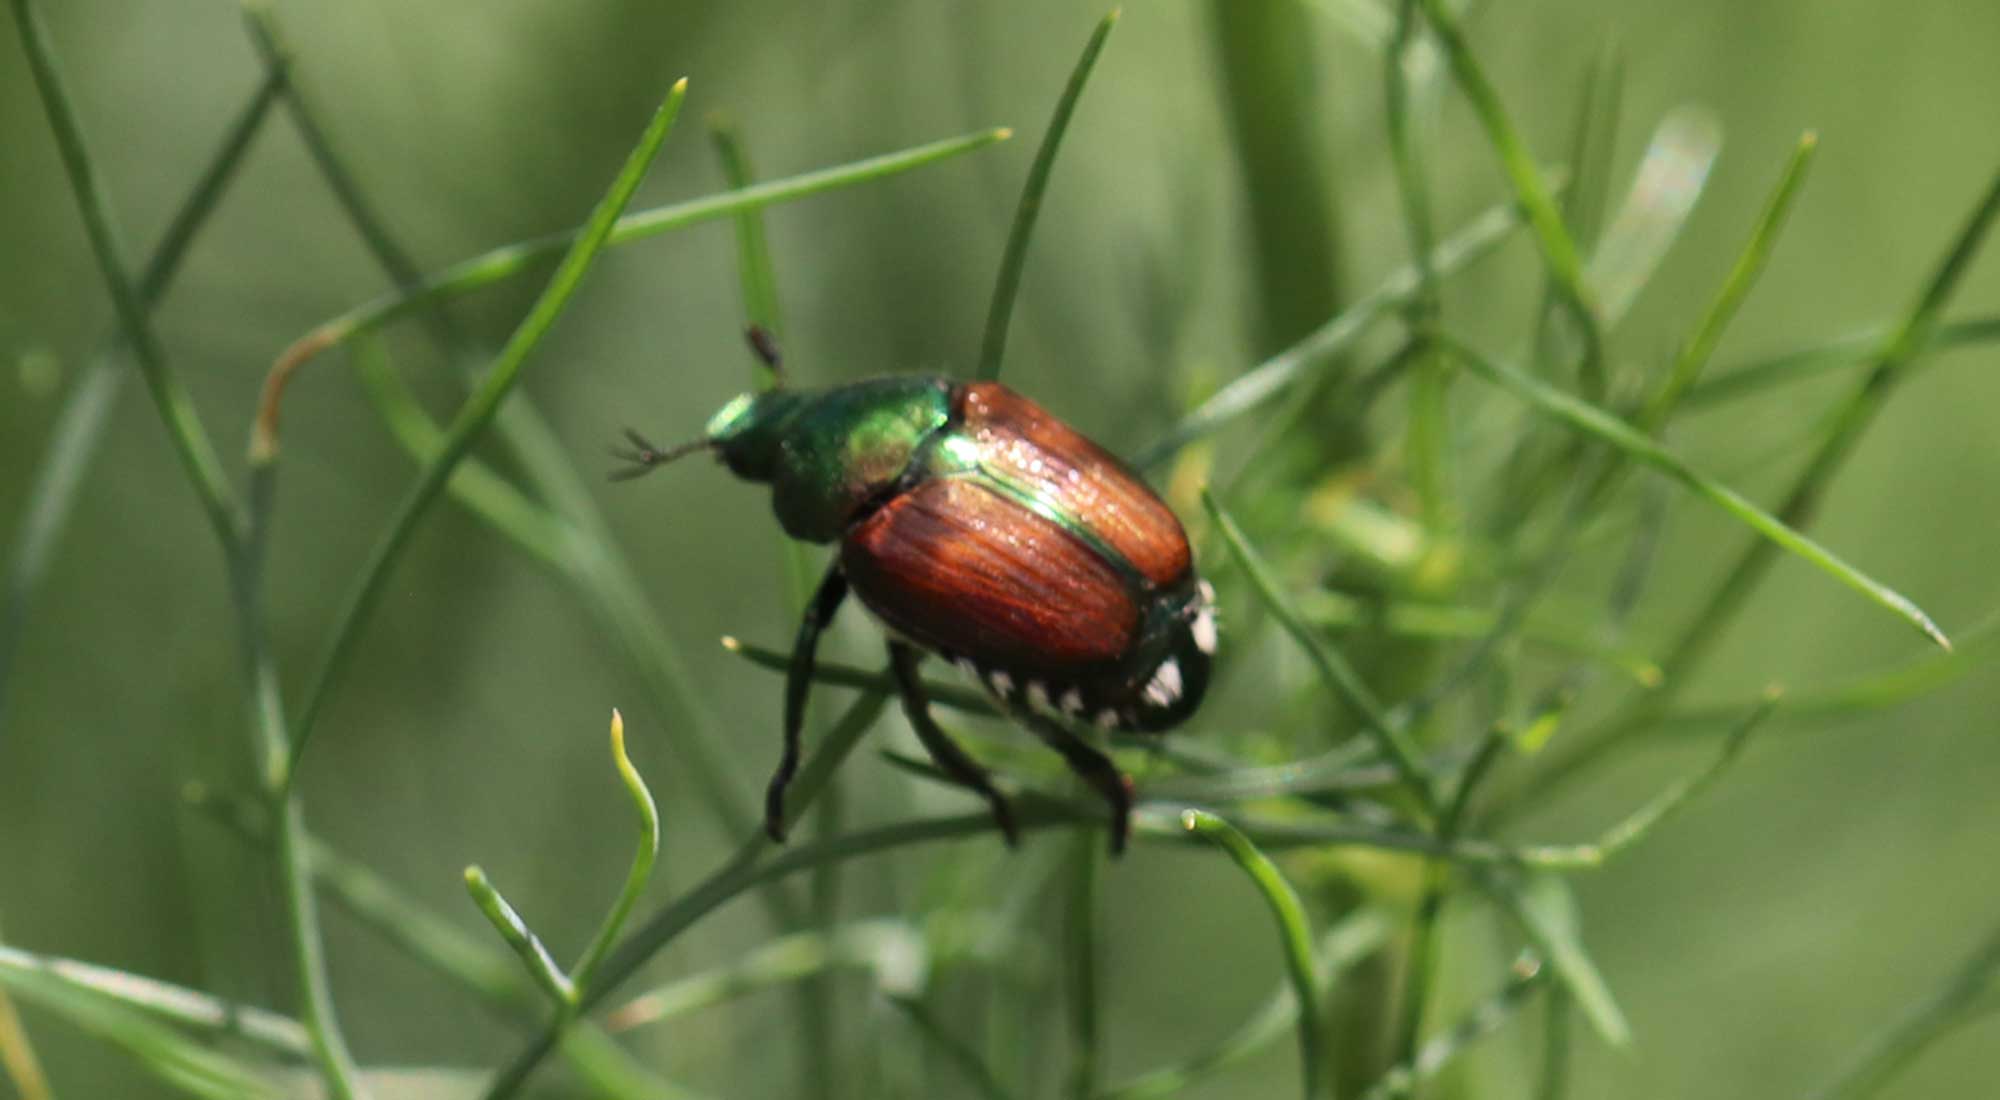 Shiny Green Beetle Identification